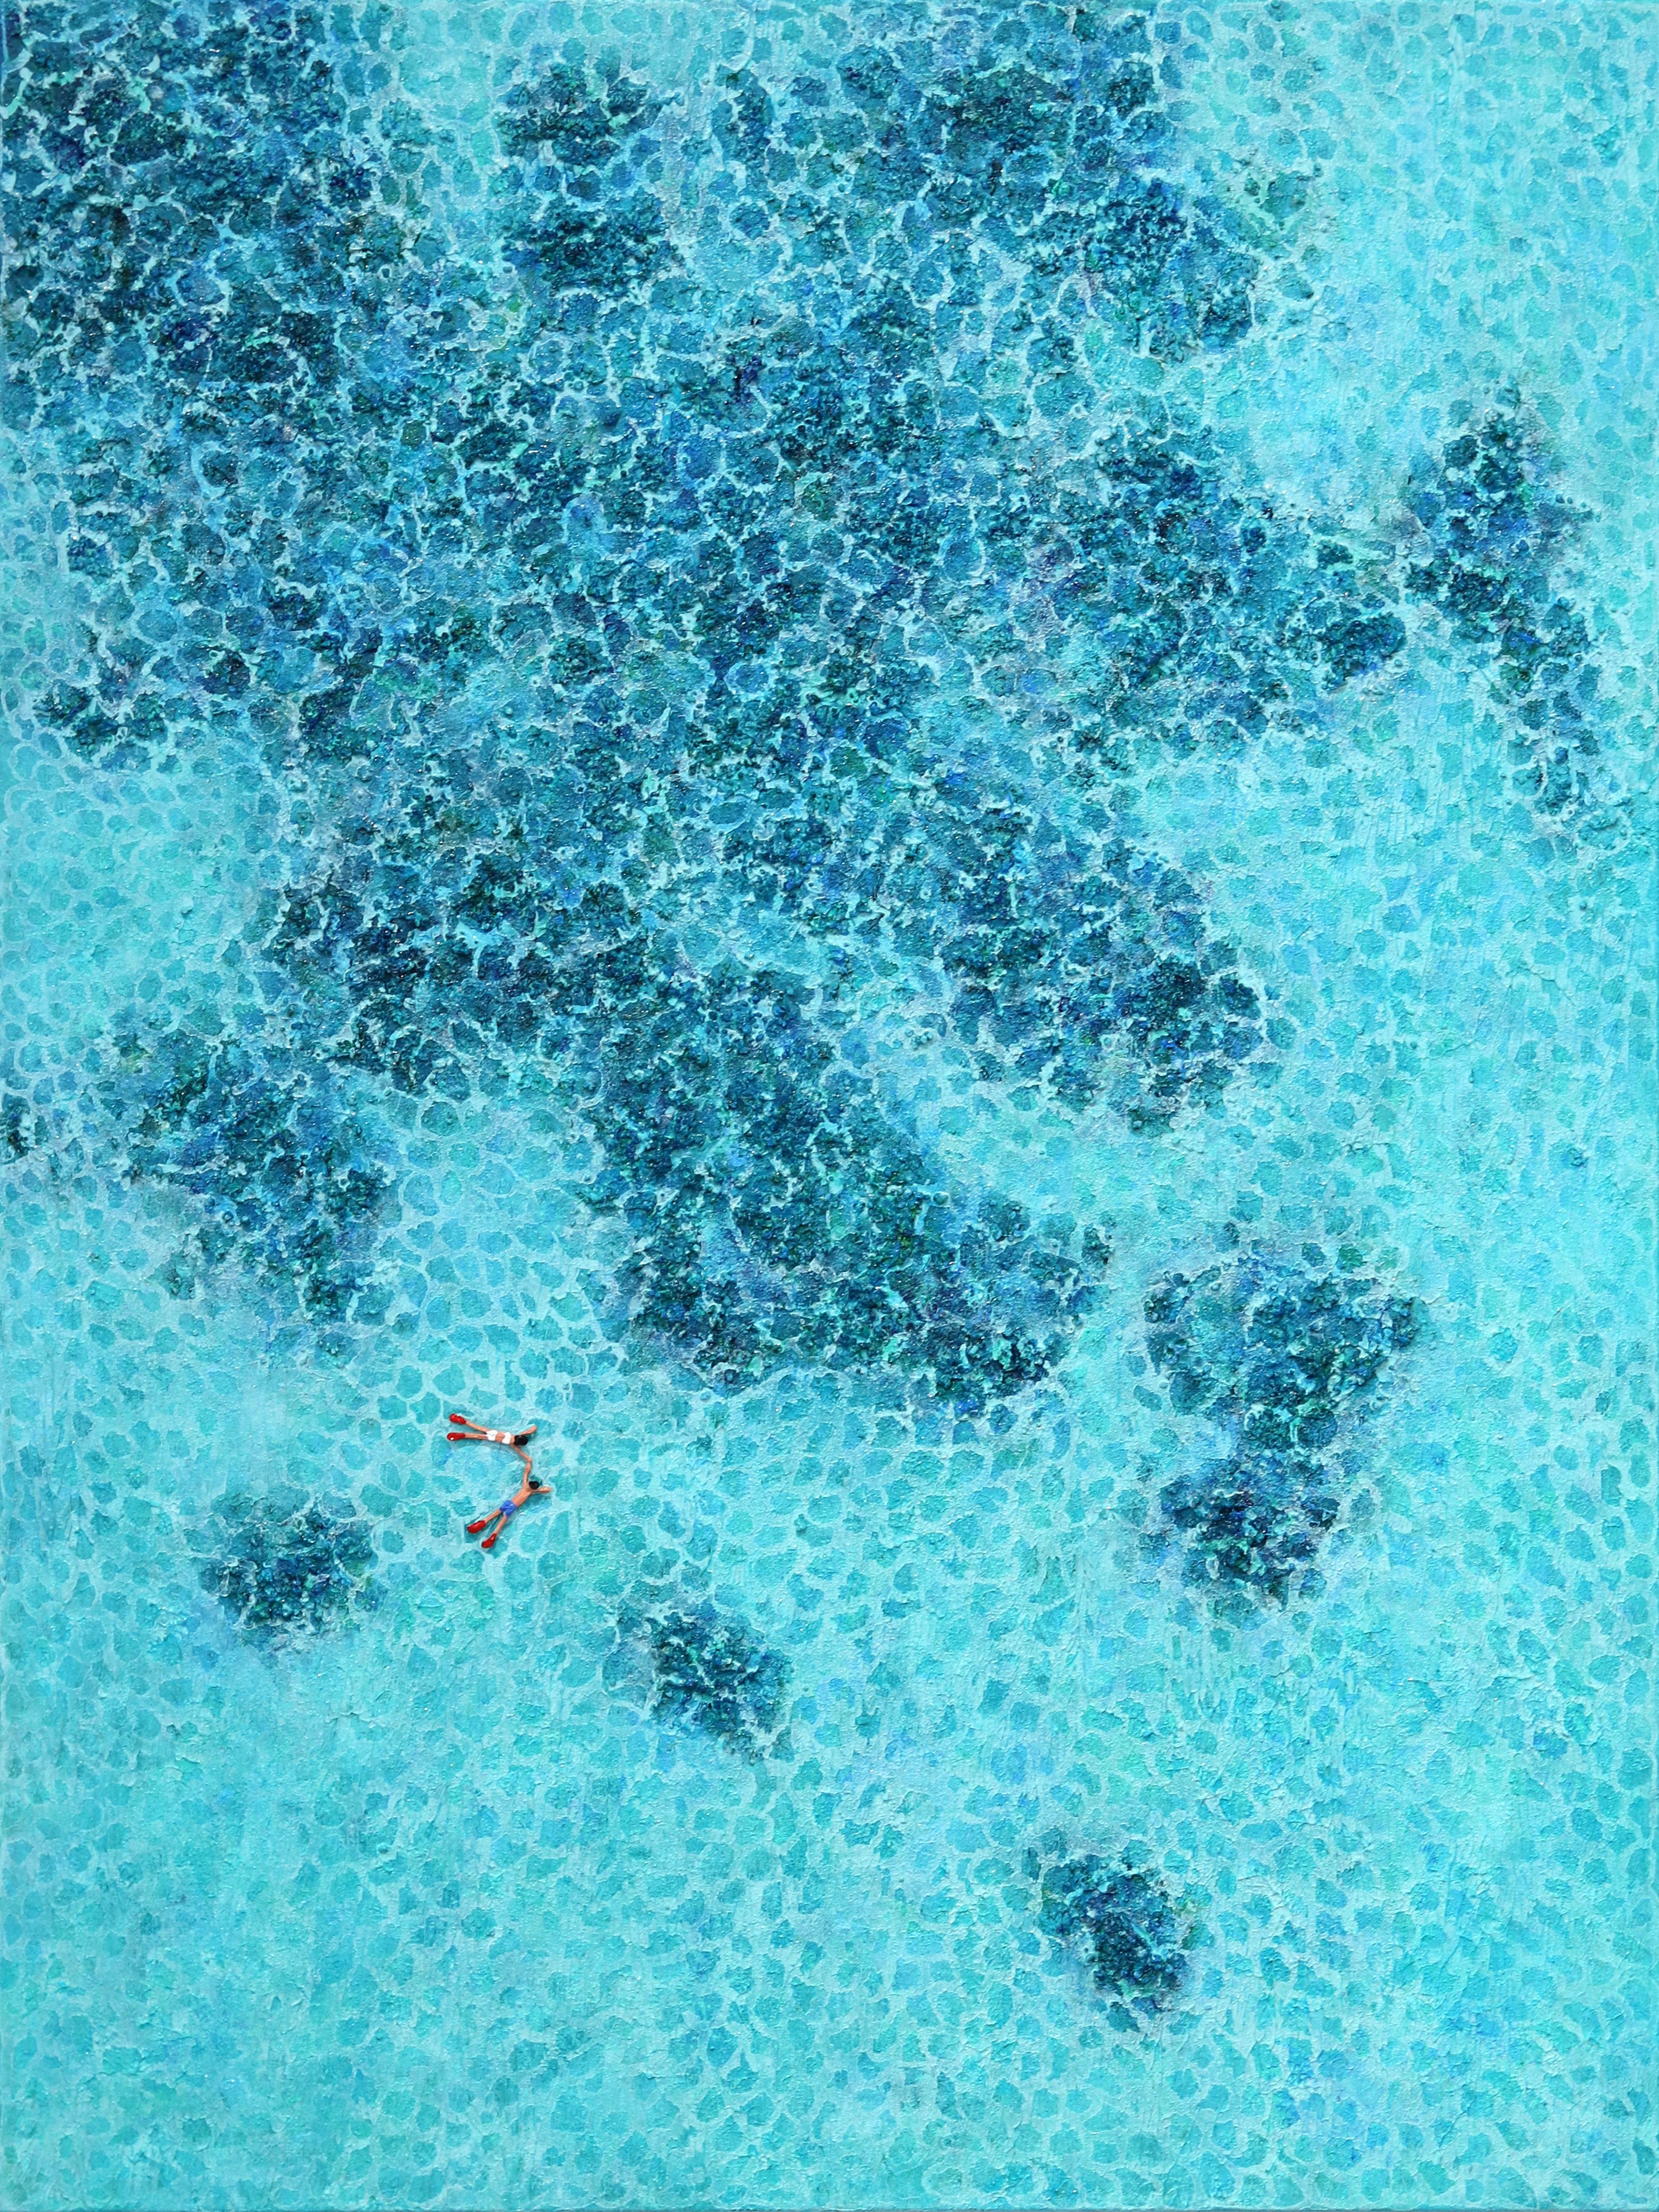 Abstract Painting Elizabeth Langreiter - You Will Always Be The One - Grande peinture de paysage aquatique bleu